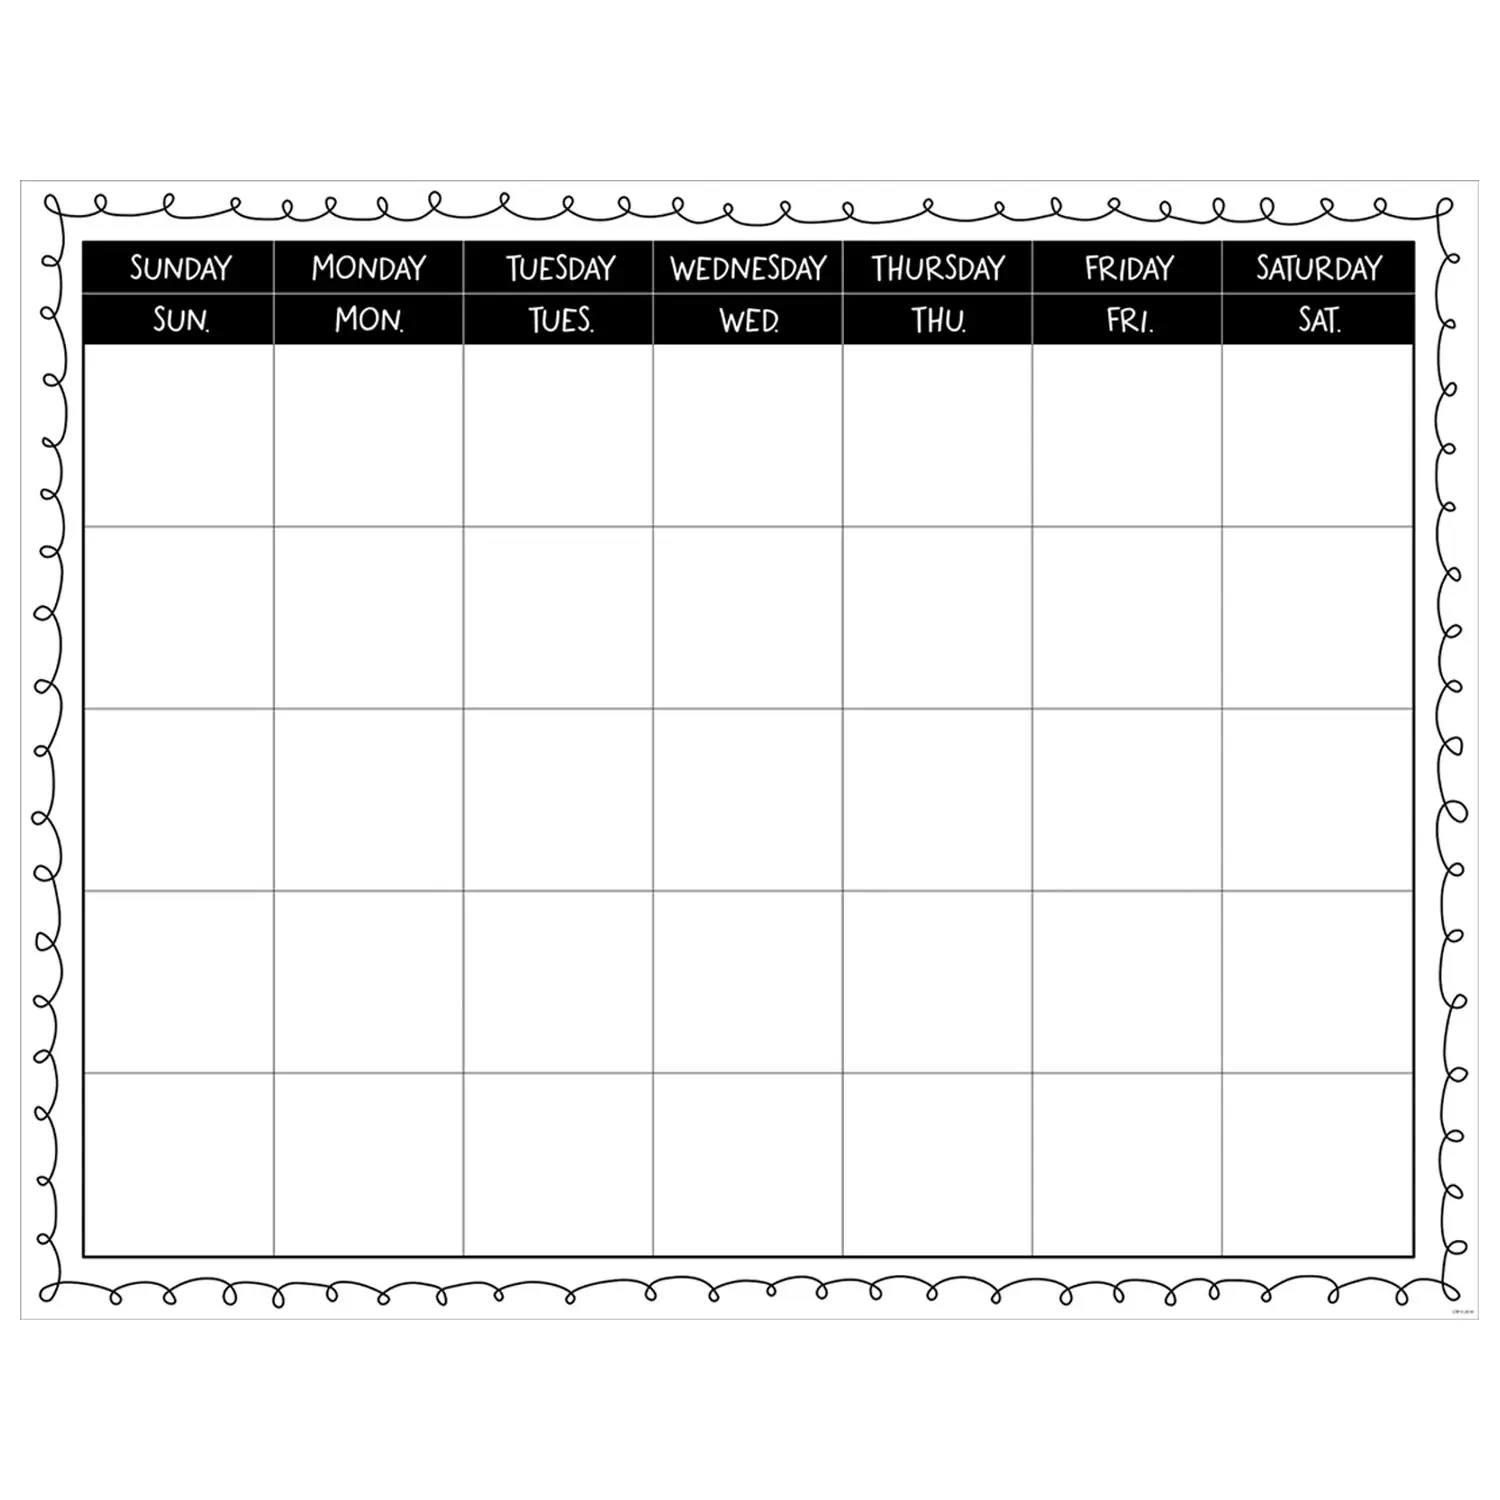 Depo Schedule Chart